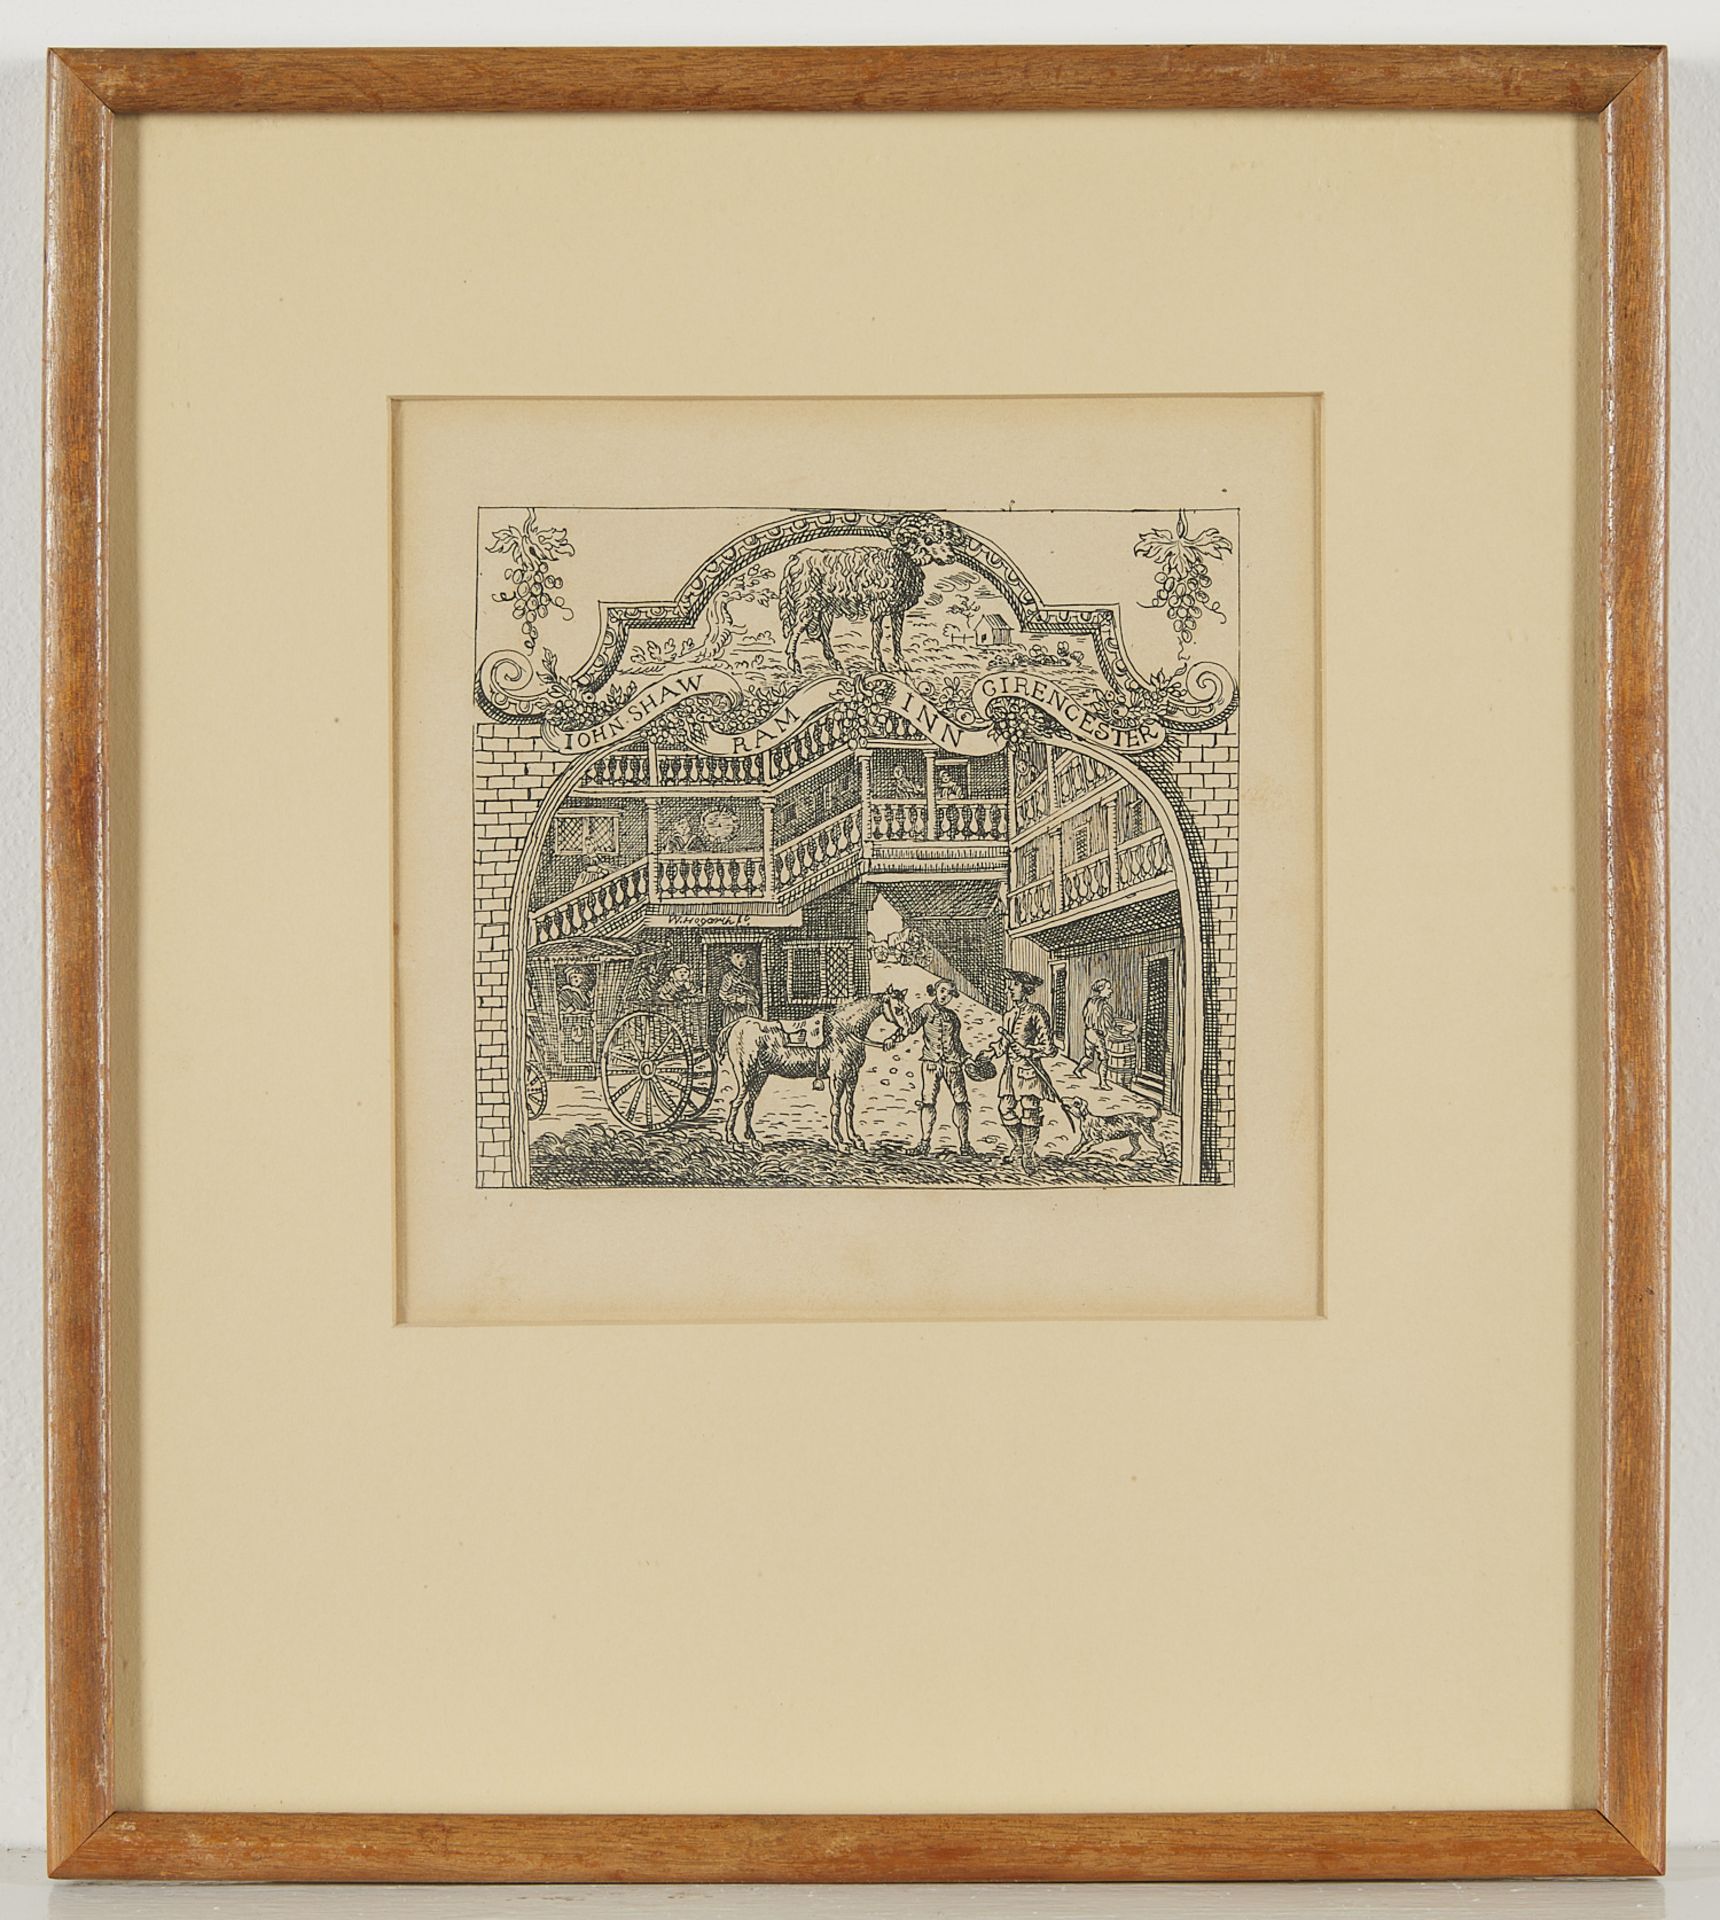 After William Hogarth "Ram Inn" Engraving - Image 2 of 5